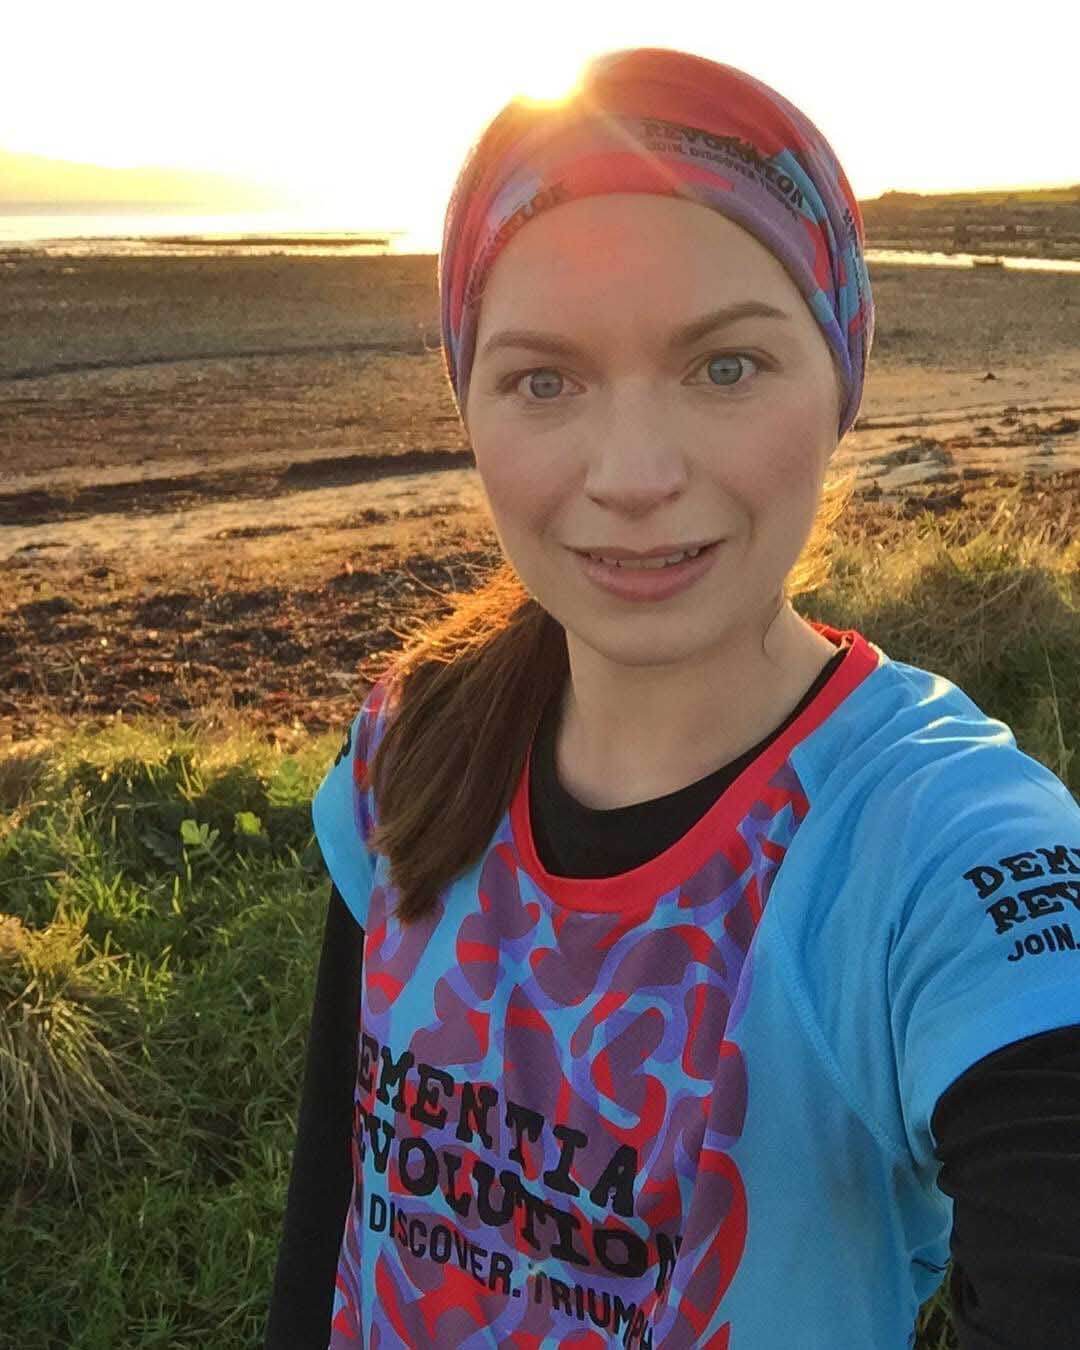 HOKA fan Louisa readies herself for the 2019 London Marathon